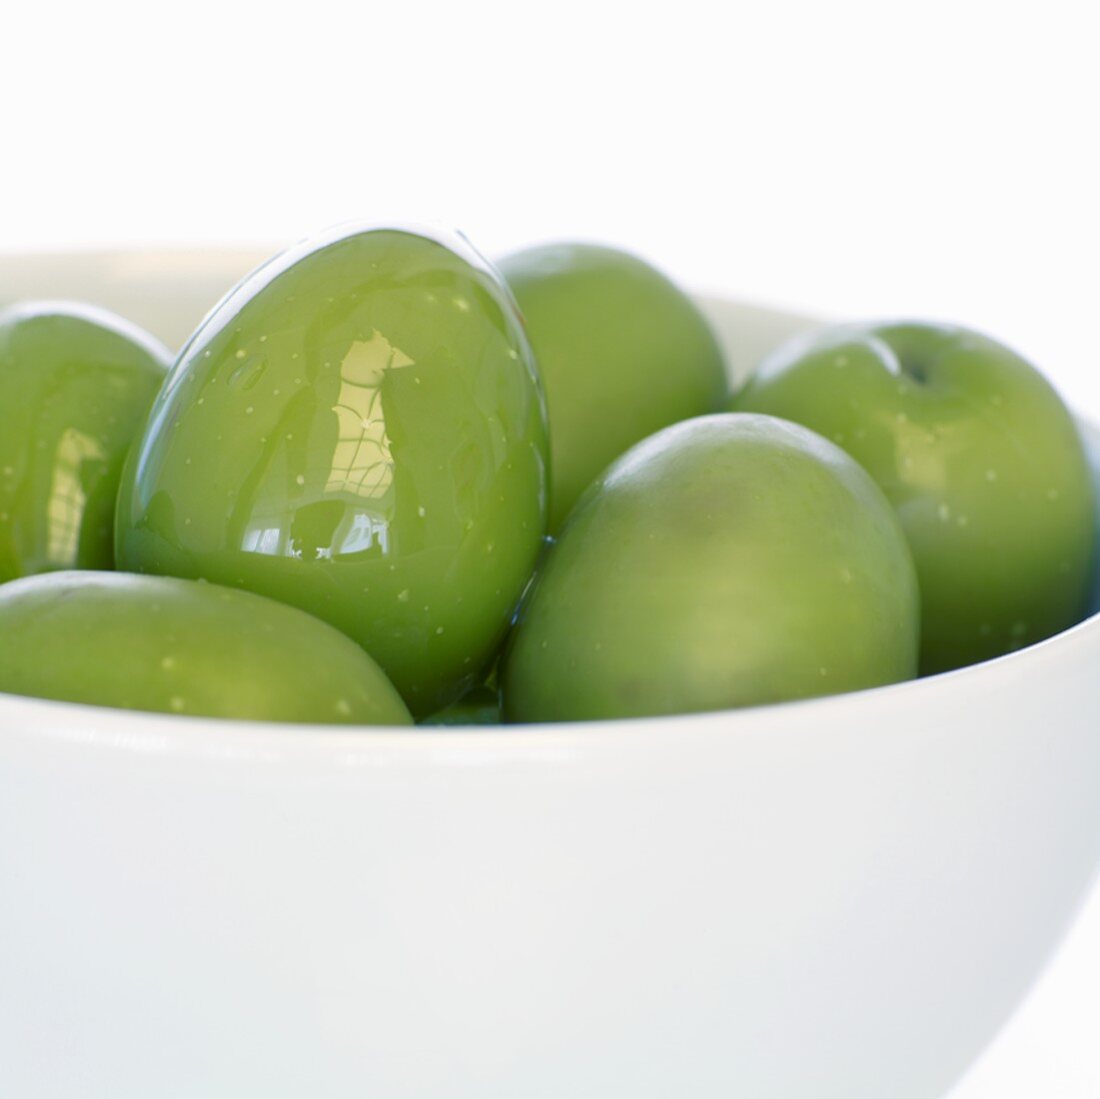 Large green olives, close-up